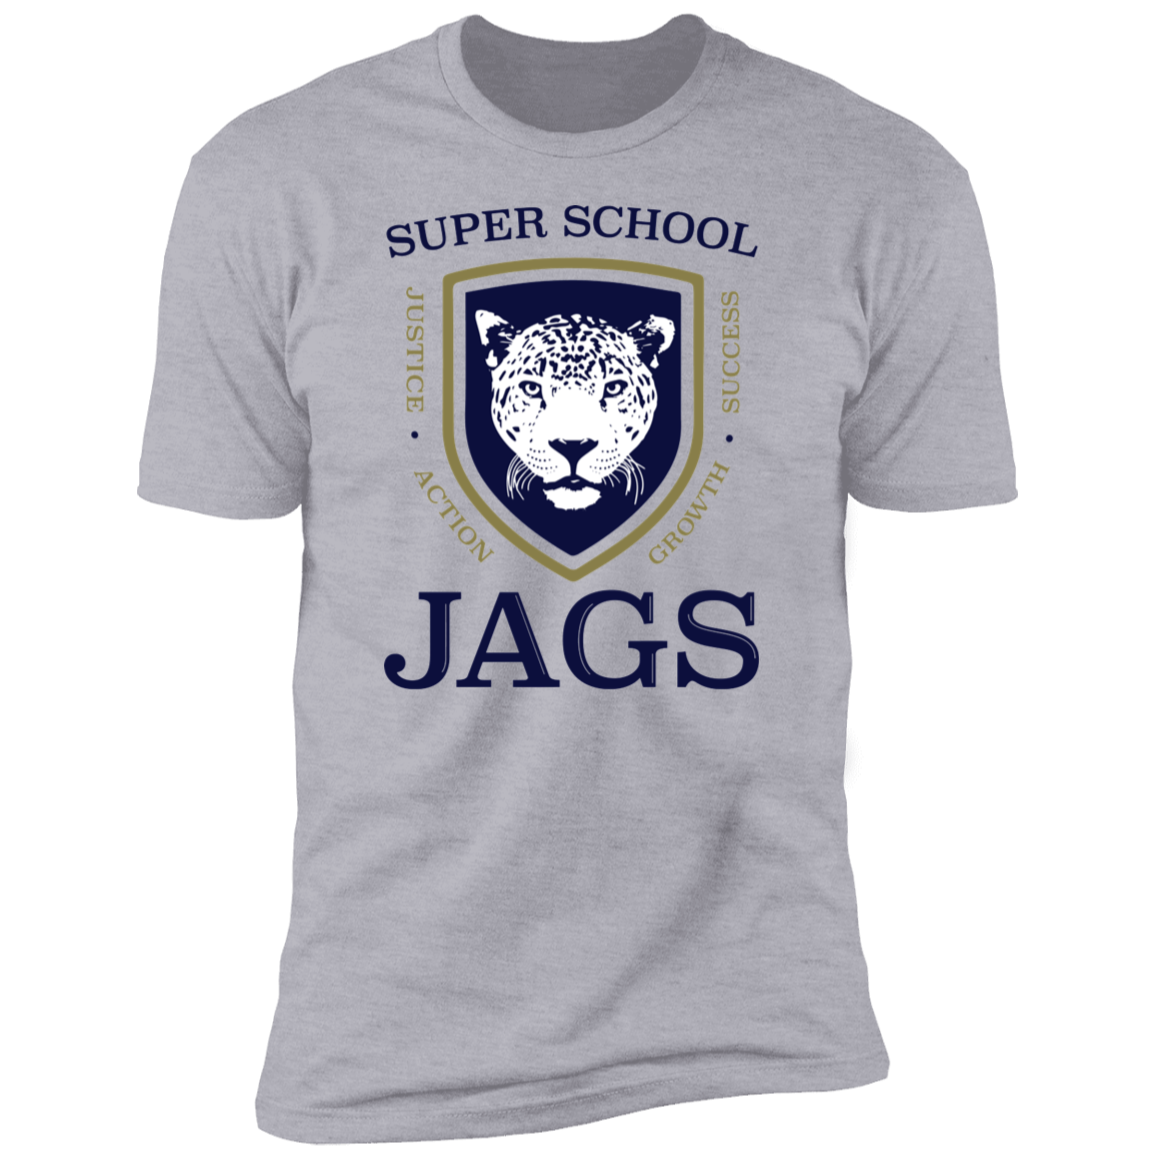 Premium Soft T-Shirt - Super School